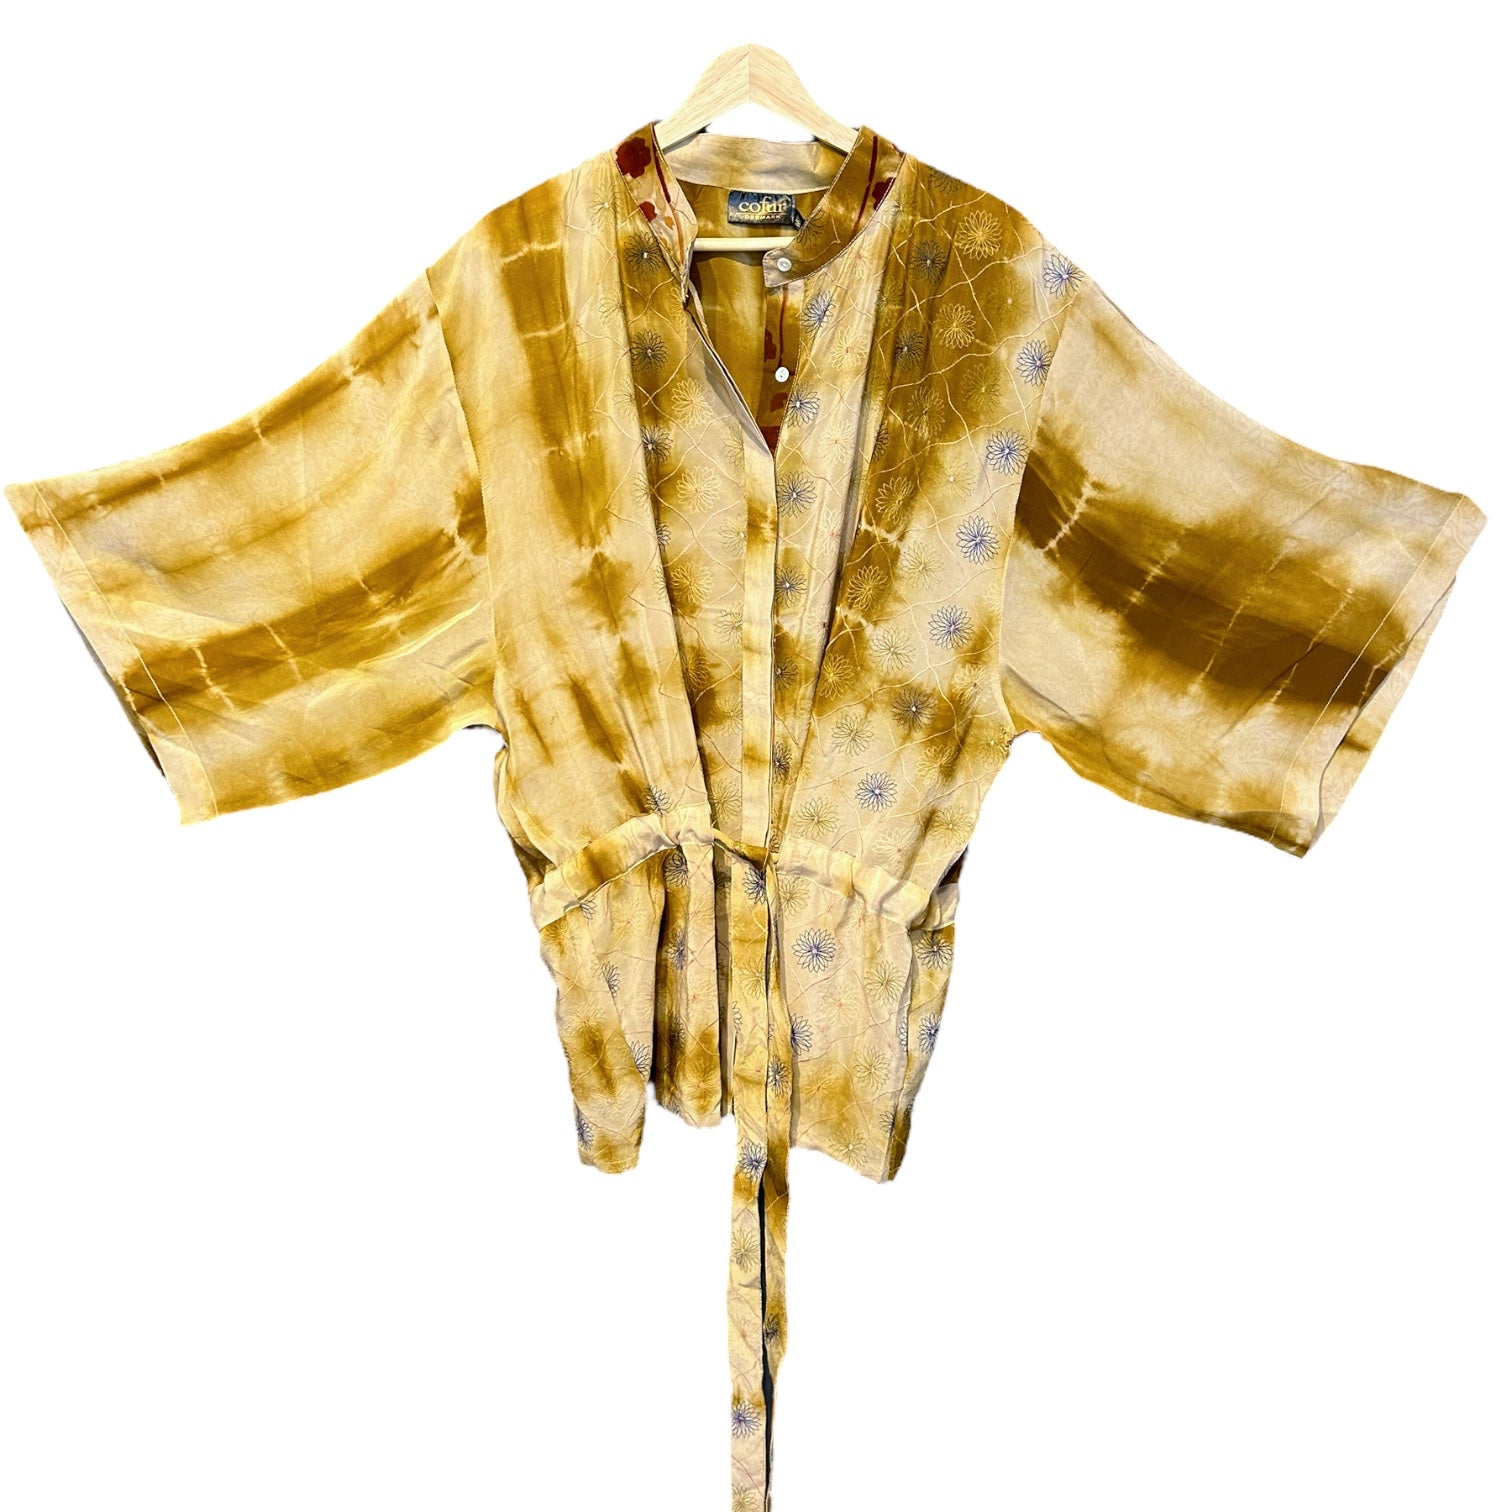 New York Kimono - No. 33 Size: M/L